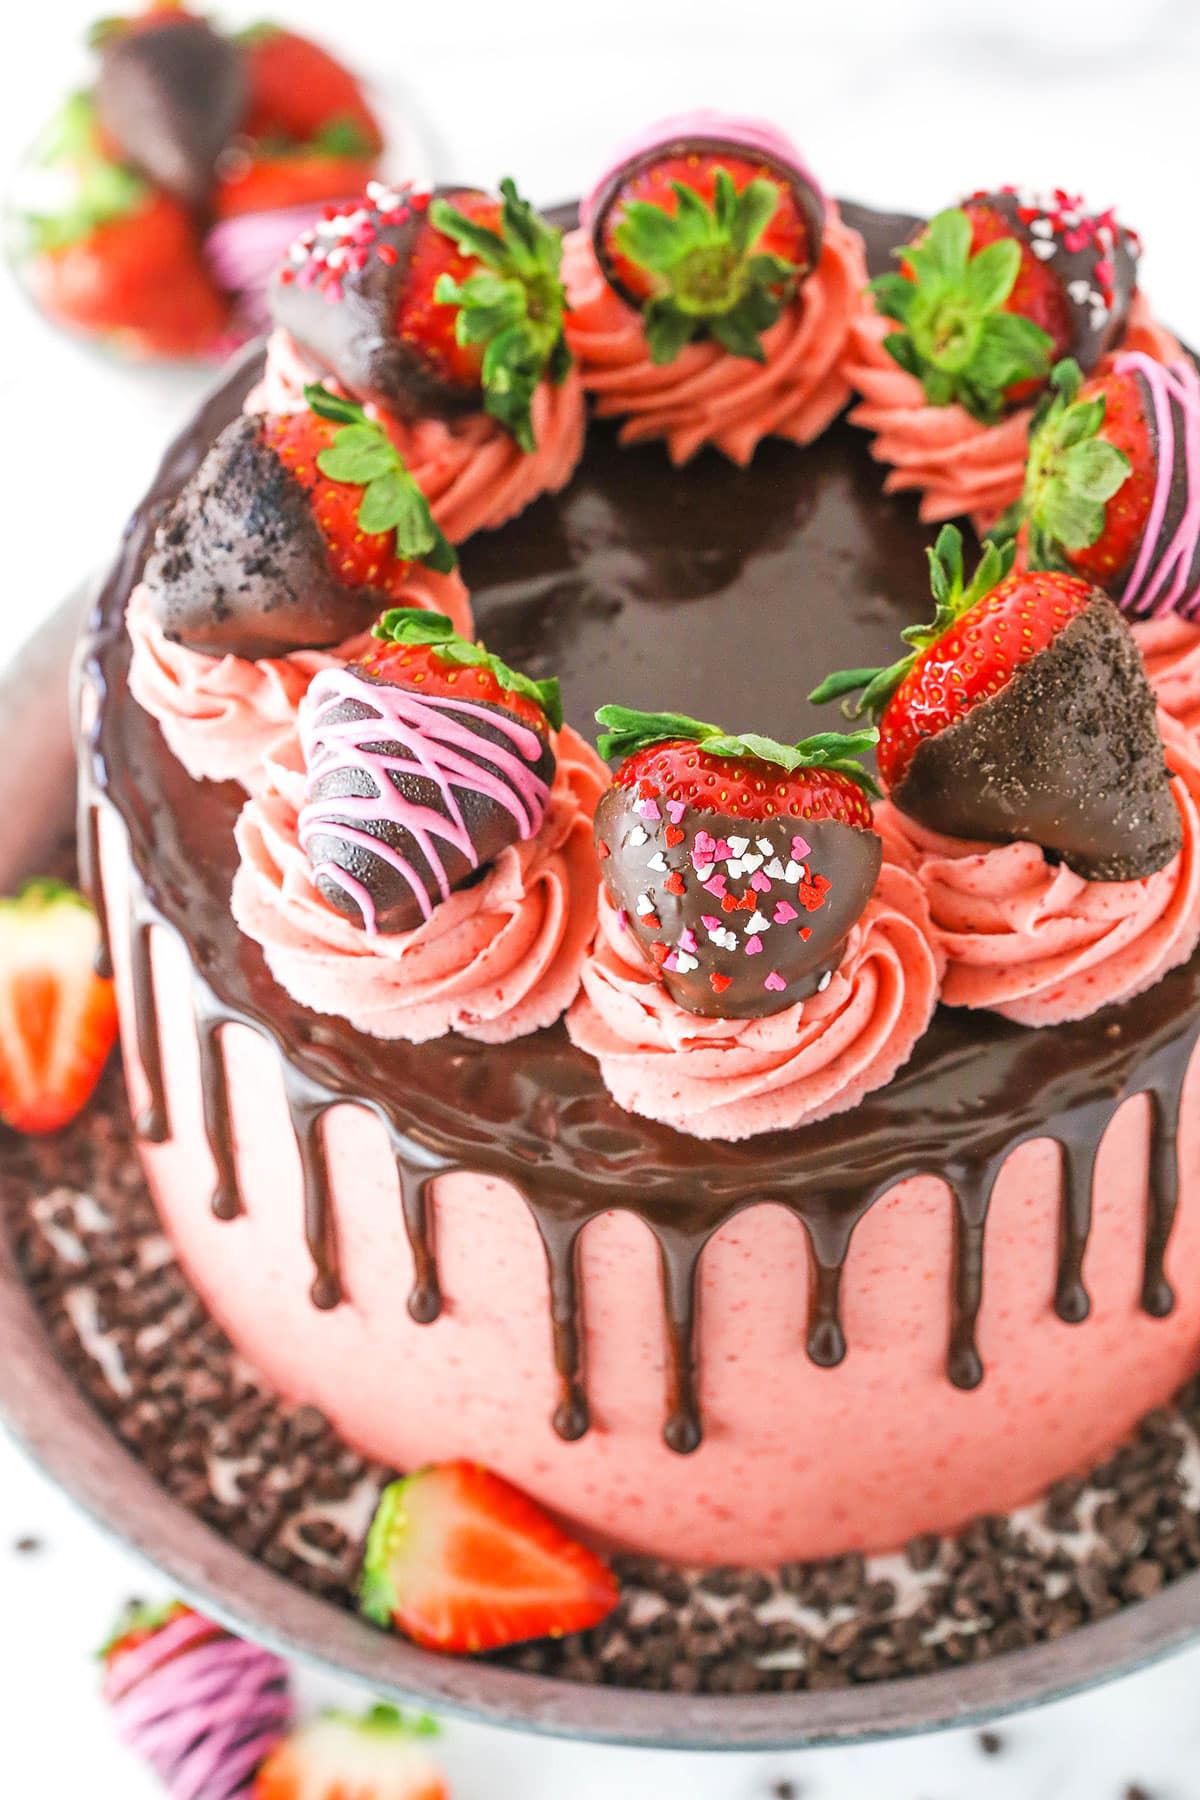 Chocolate Strawberry Cake - Preppy Kitchen